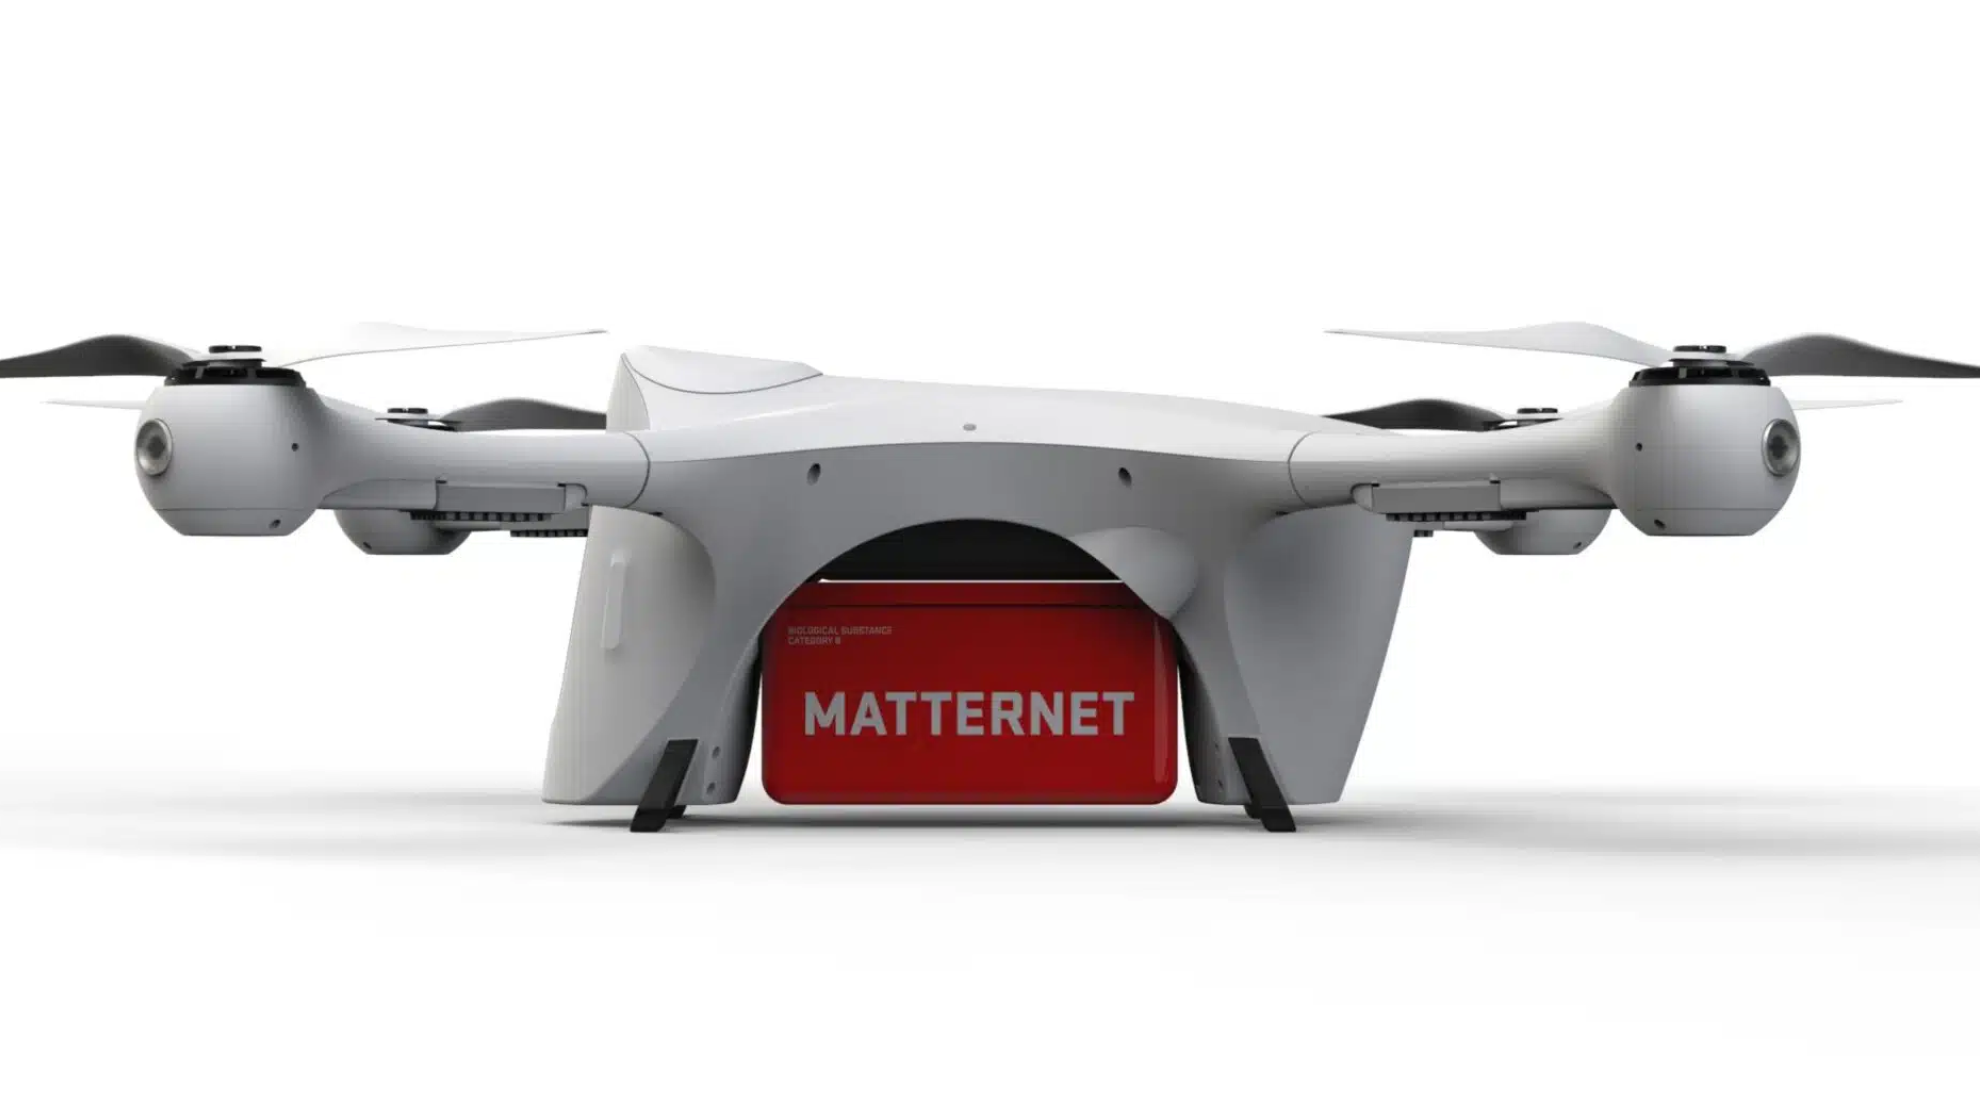 Matternet drone